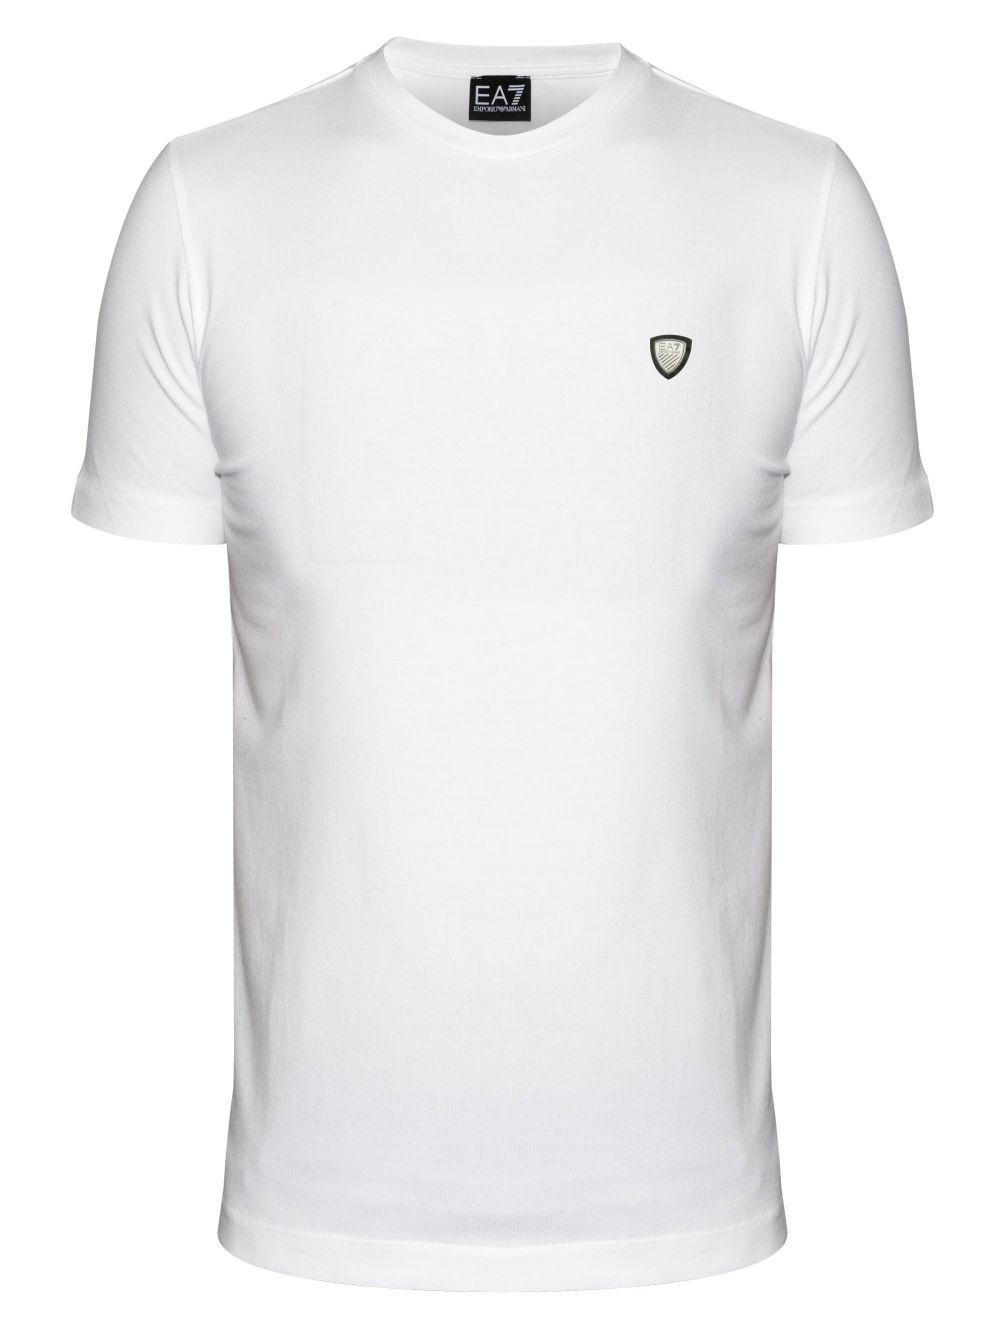 Black and White Shield Logo - EA7 White Shield Logo T-shirt | Designerwear